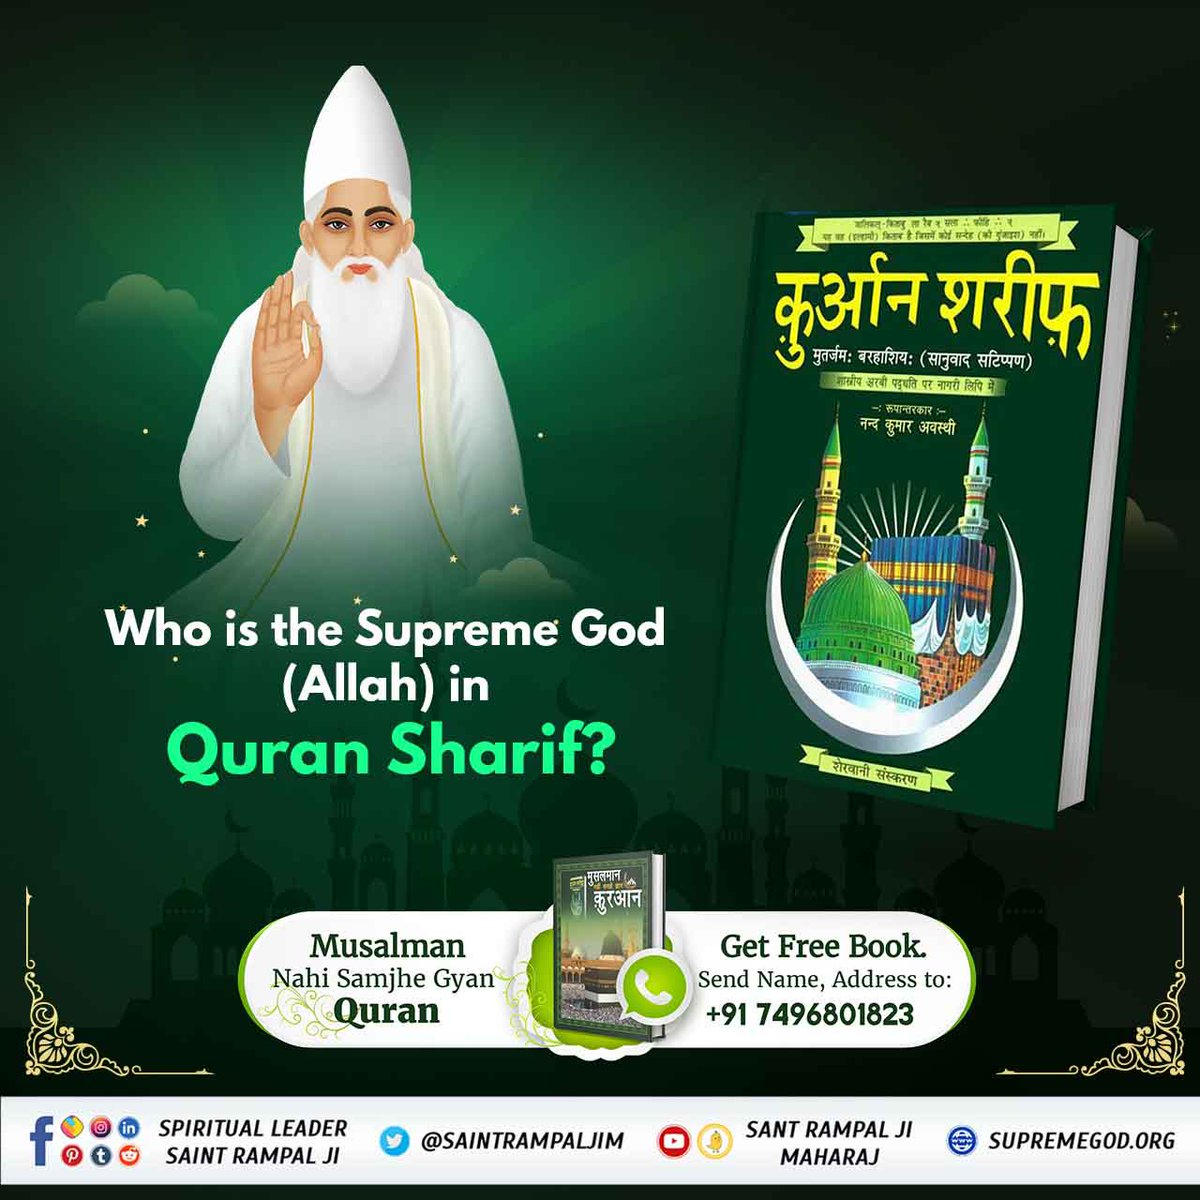 #GodMorningFriday
Who is the Supreme God (Allah)in Quran Sharif????
Get Free Book 'Musalman Nahi Samjhe Gyan Quran'
AlKabirIslamic YouTube Channel SantRampalJiMaharaj